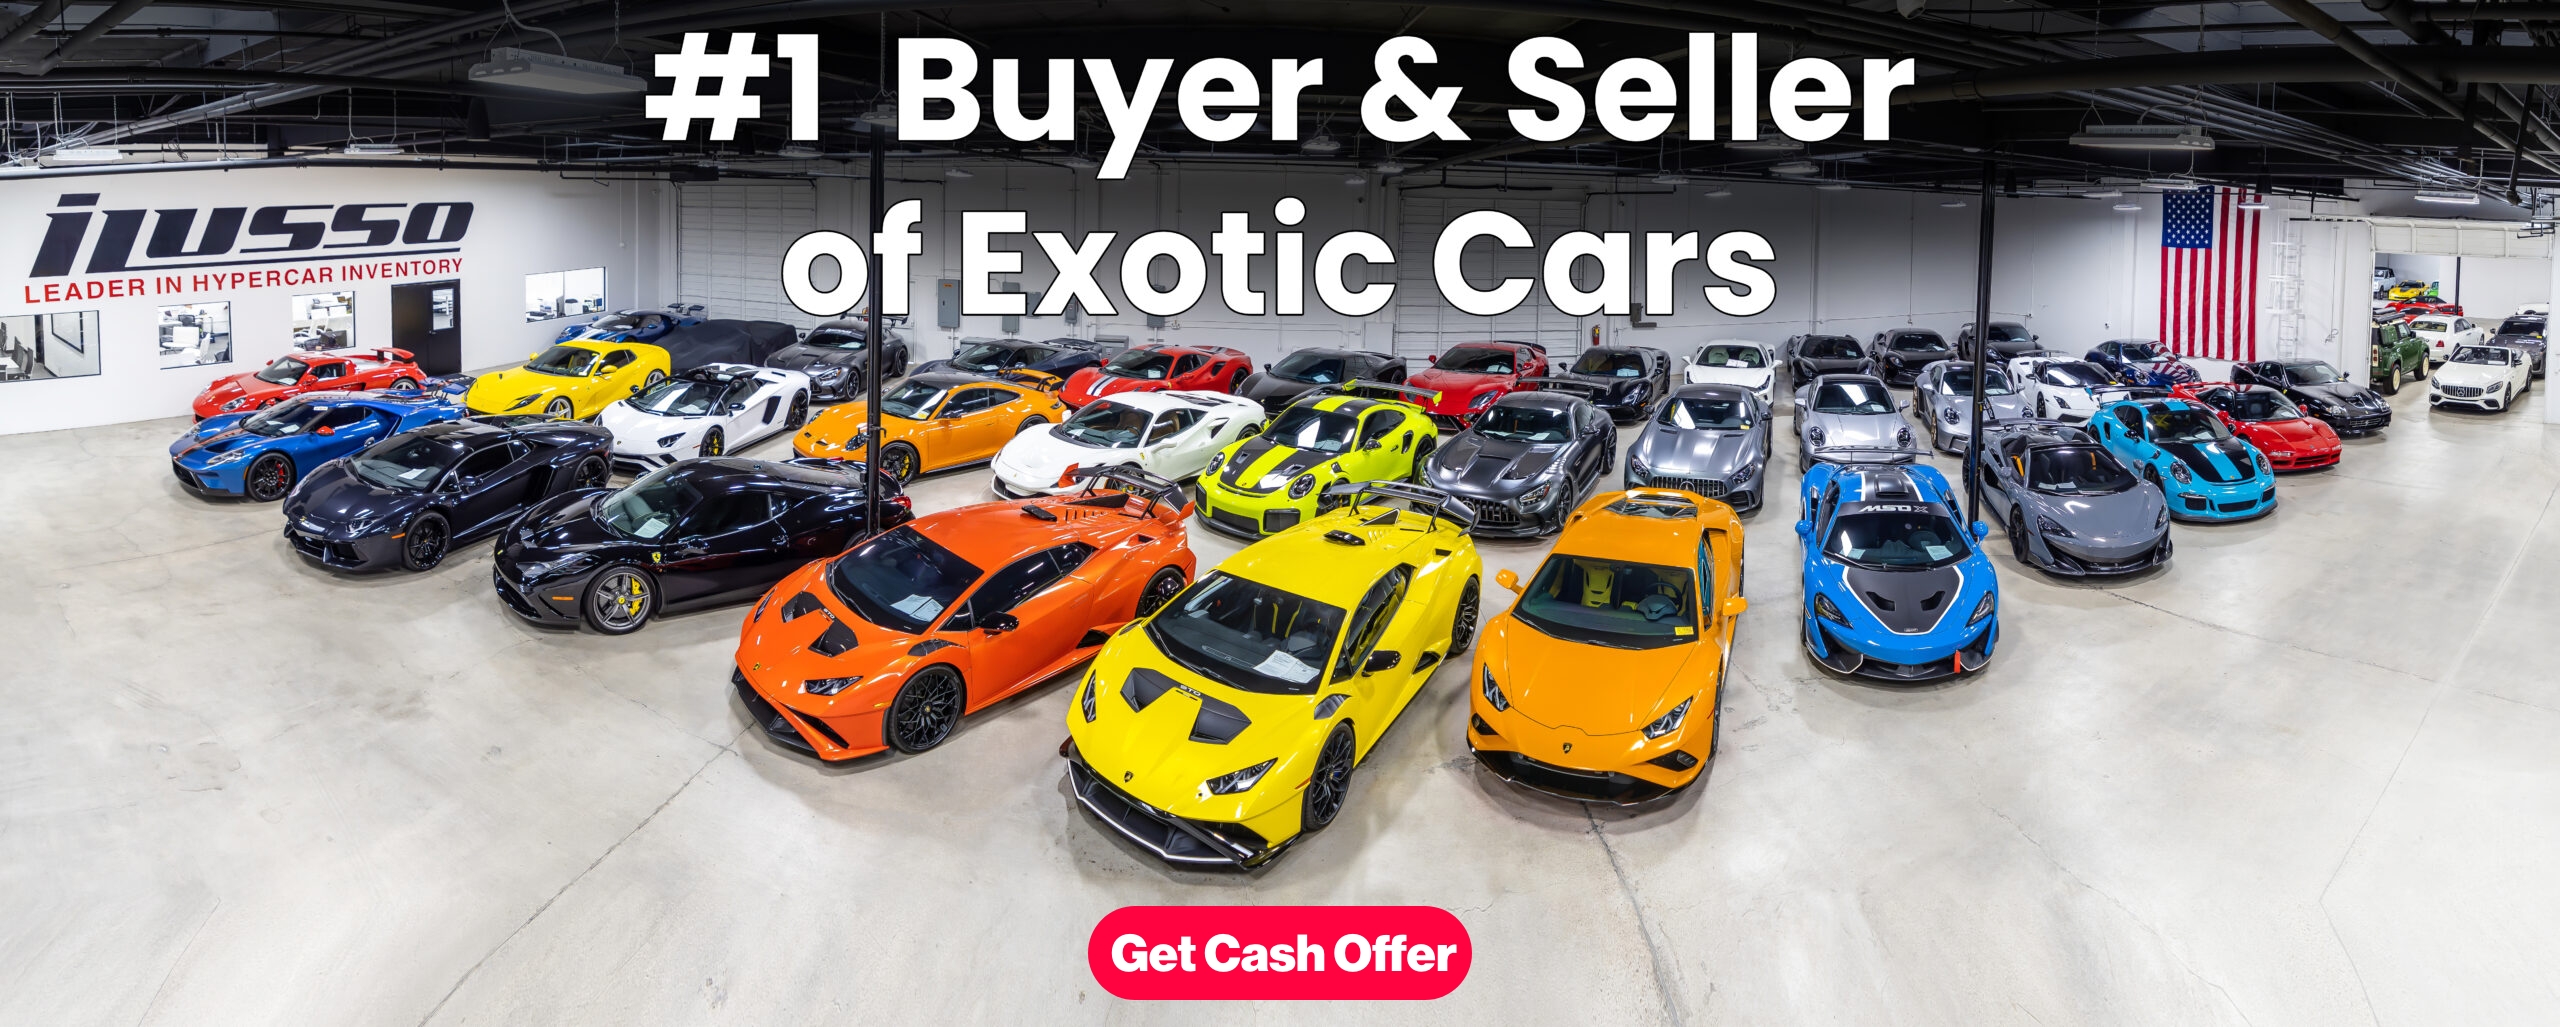 tornado oosten Egyptische iLusso #1 Buyer & Seller of Exotic Cars, Leader in Hyper Car Inventory